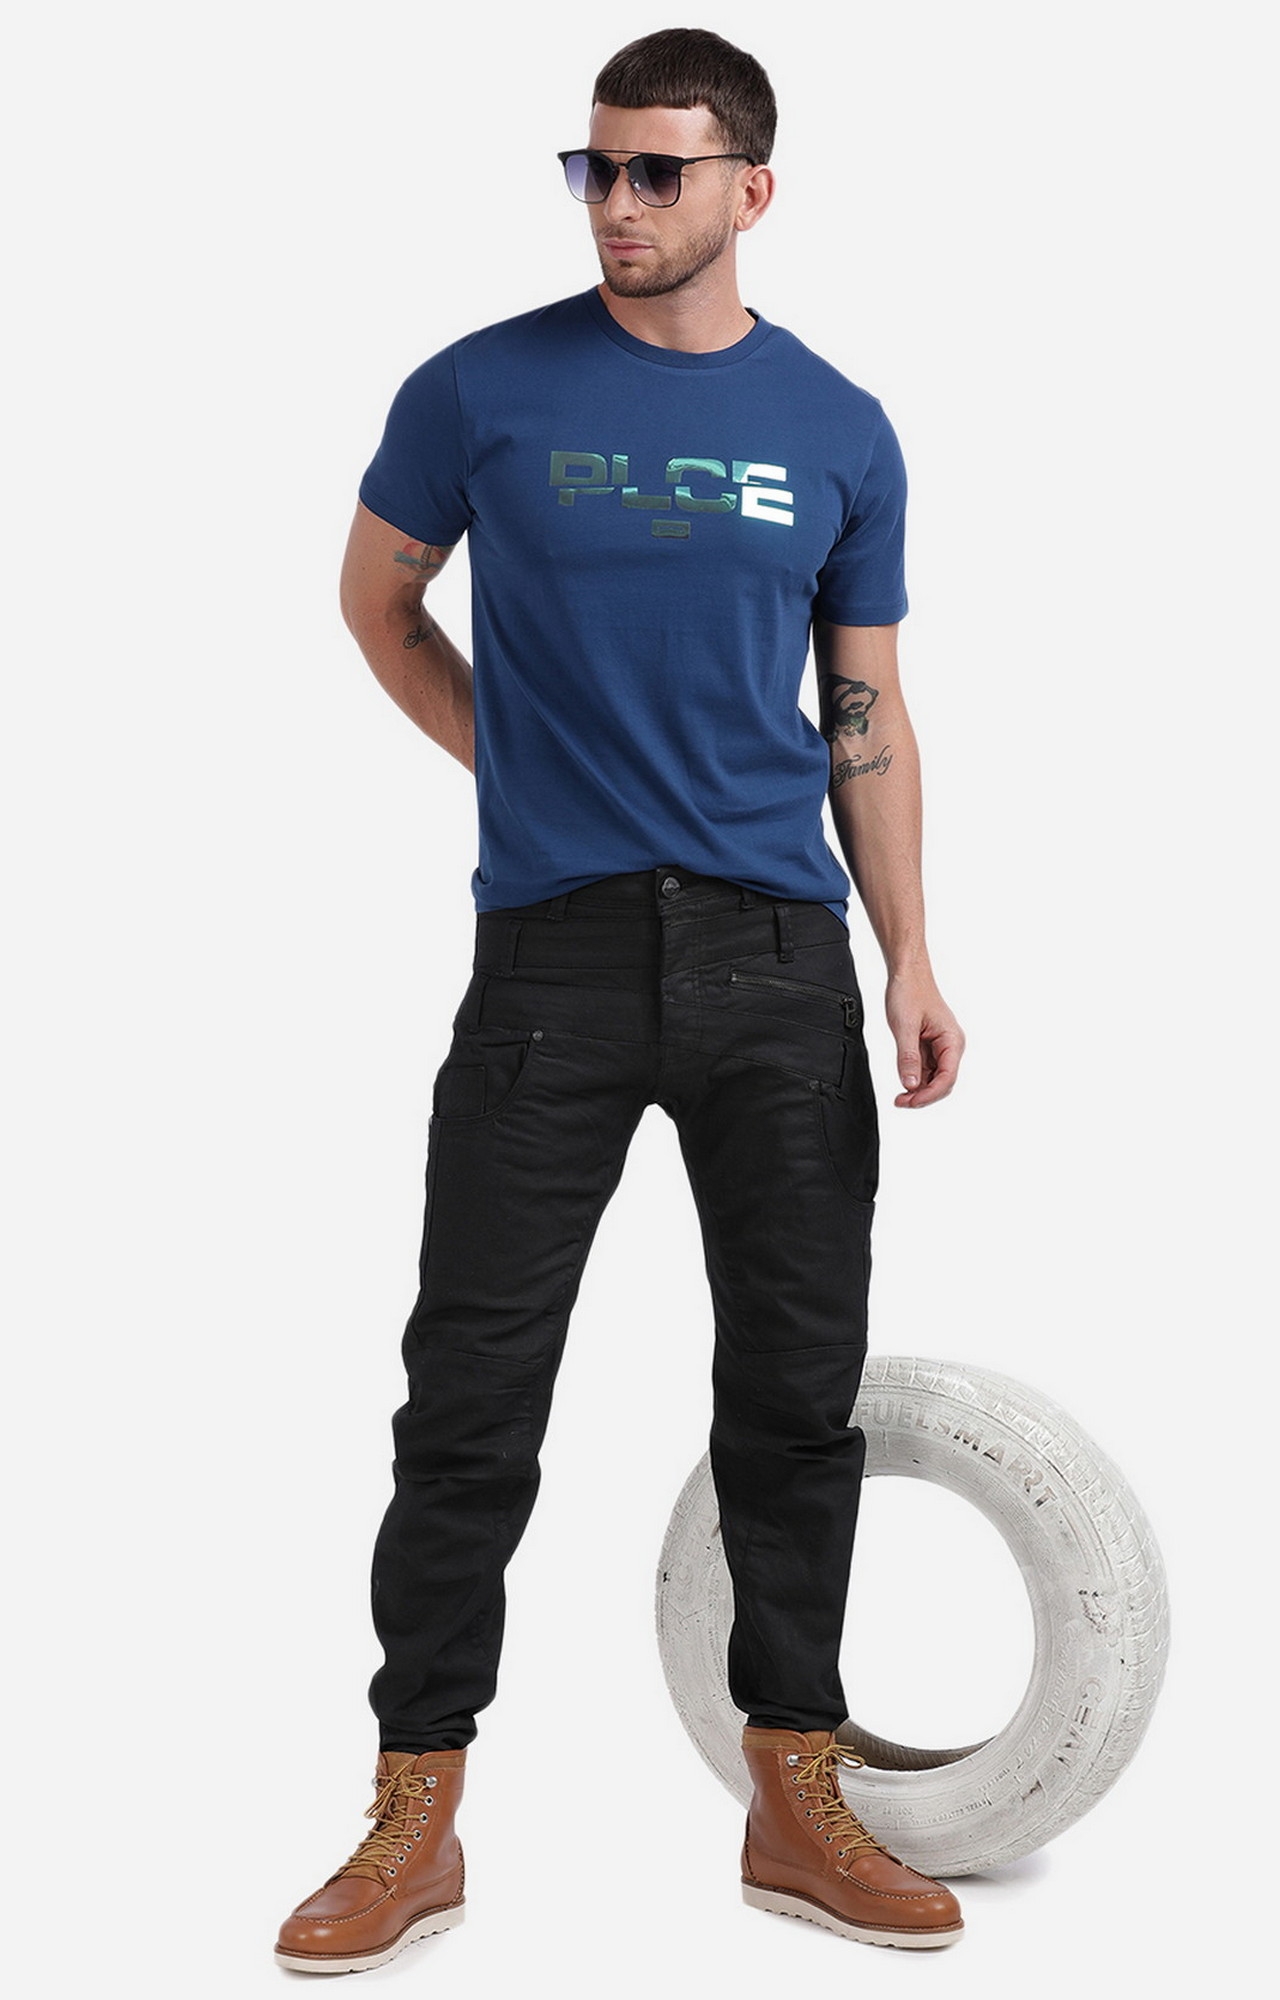 883 Police | Men's Navy Cotton Typographic Printed T-Shirt 8